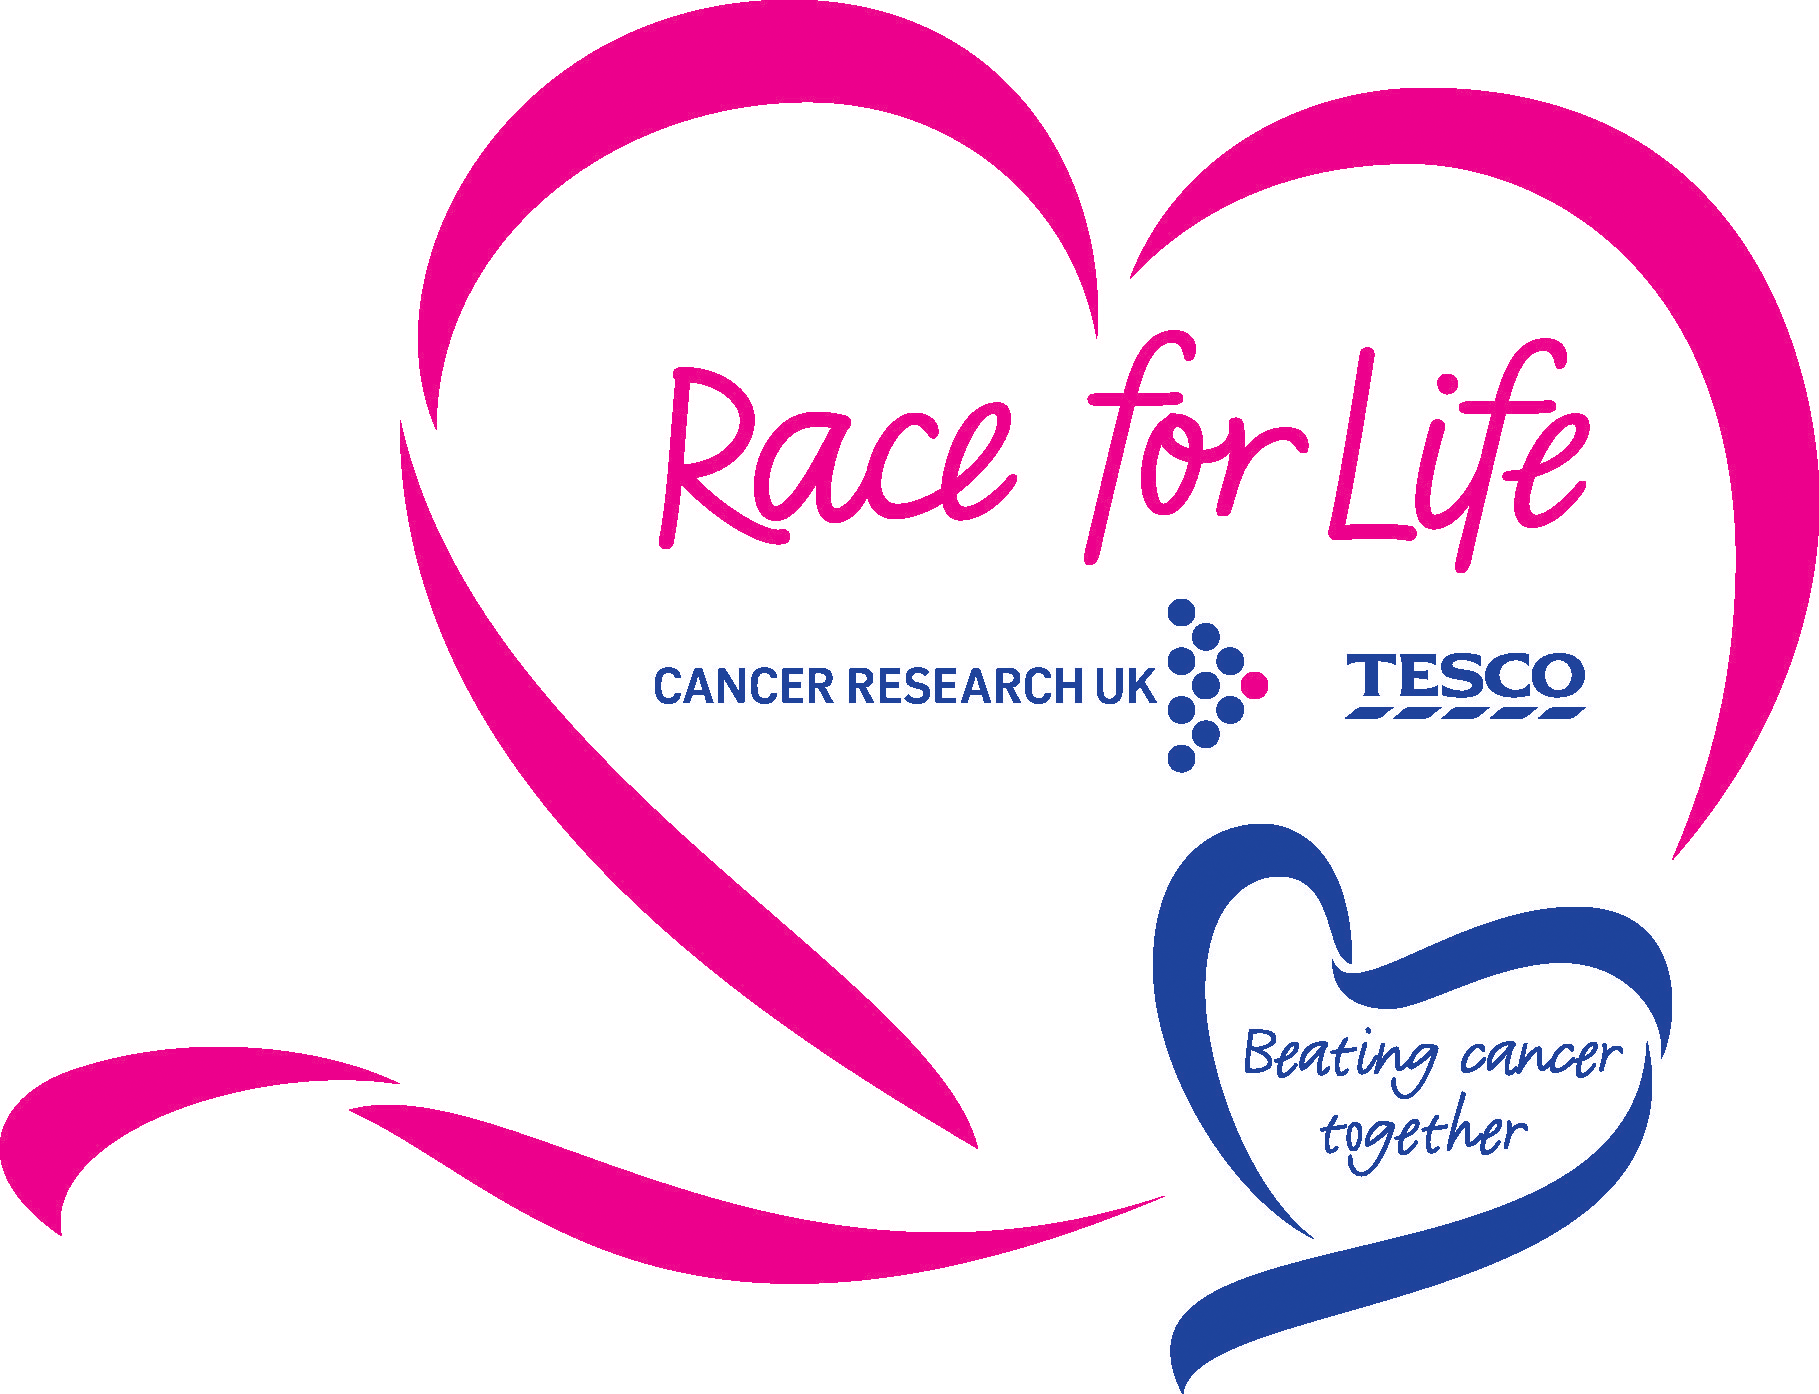 All Heart Logo - Truro Running Club » Race for Life/Tesco heart logo